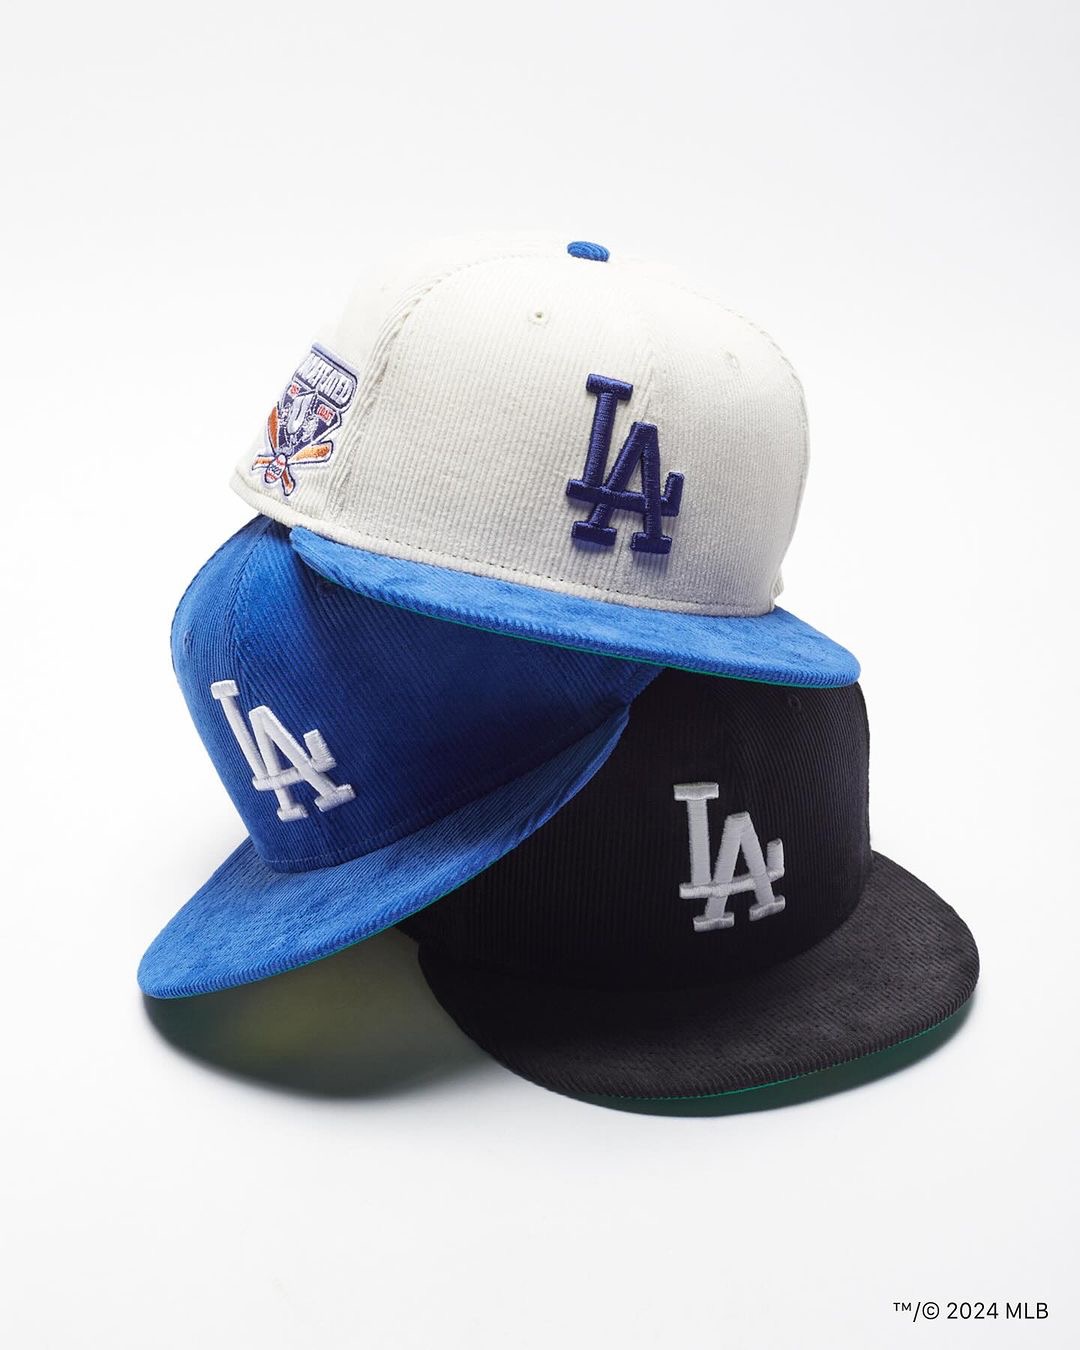 UNDEFEATED x Los Angeles Dodgers x New Era 3月15日発売